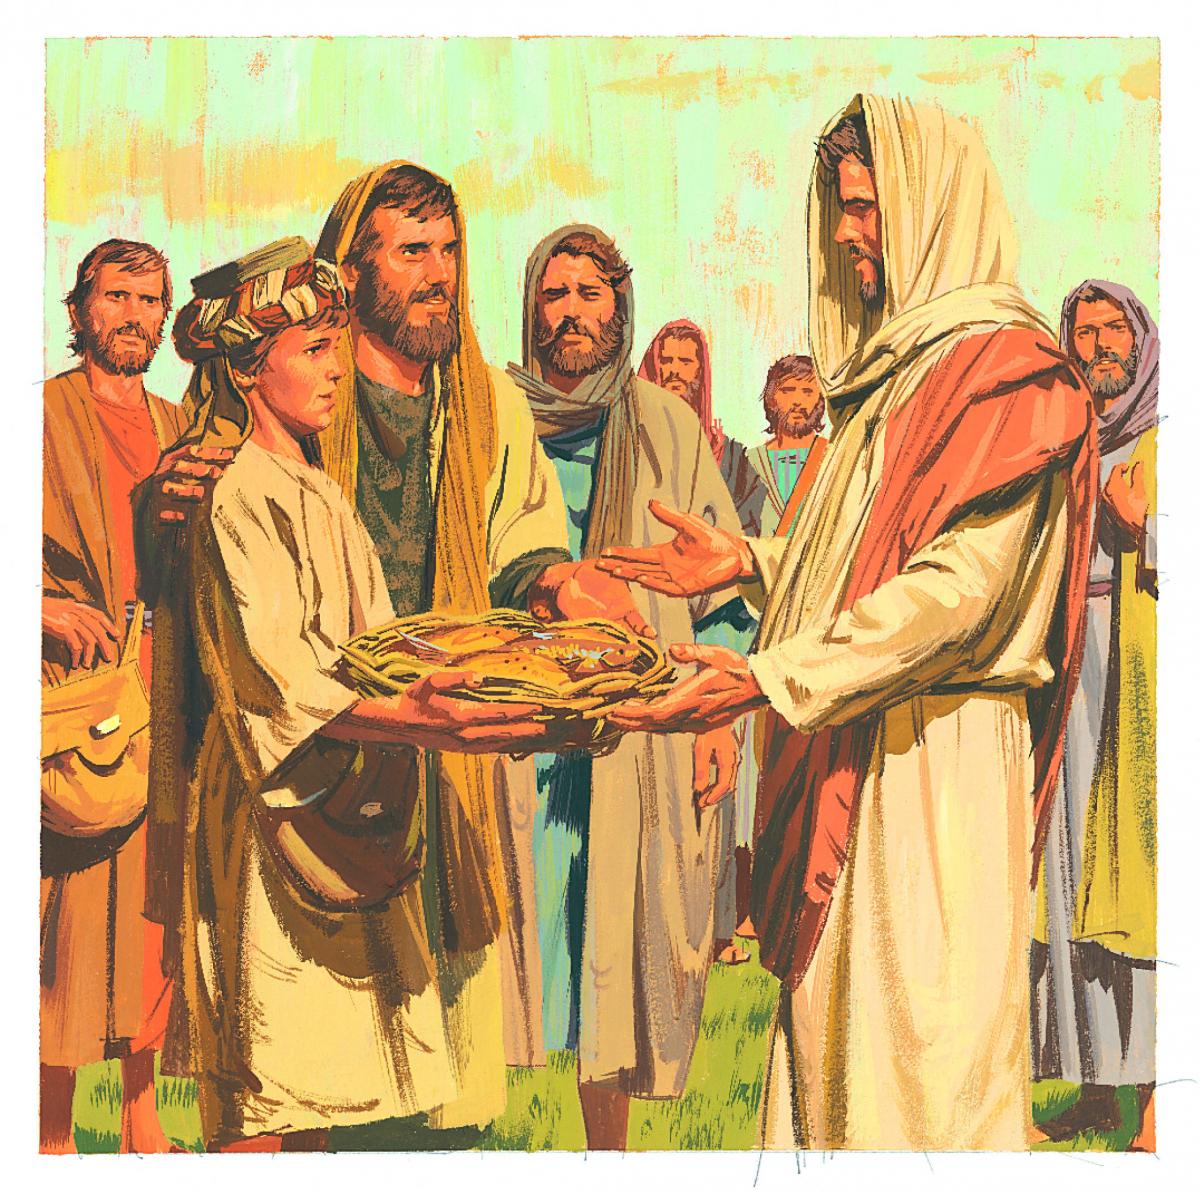 Jesus feeds the multitude